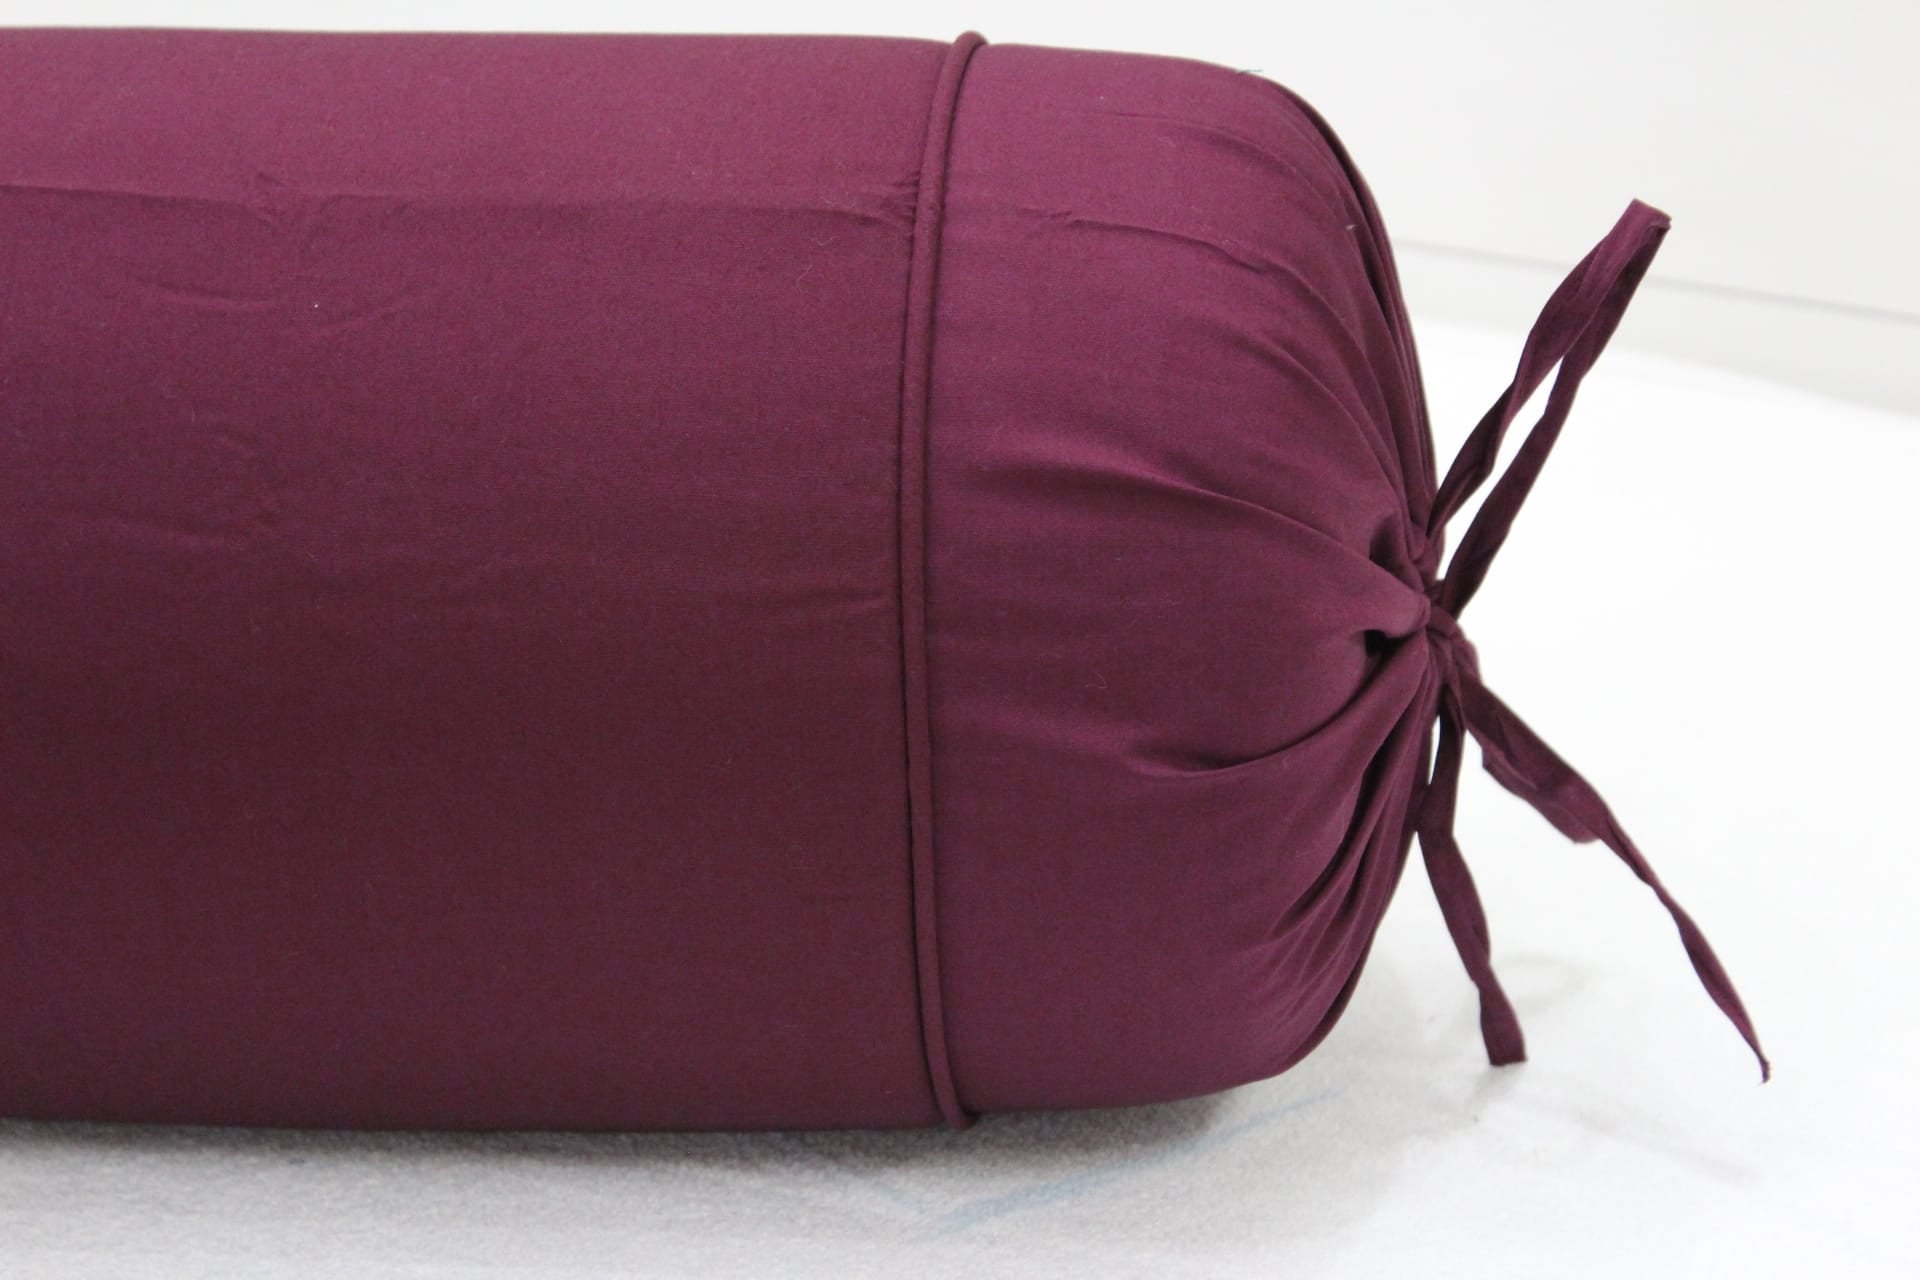 Comfortable Plain Cotton Bolster Cover Set 2pcs in Burgundy online